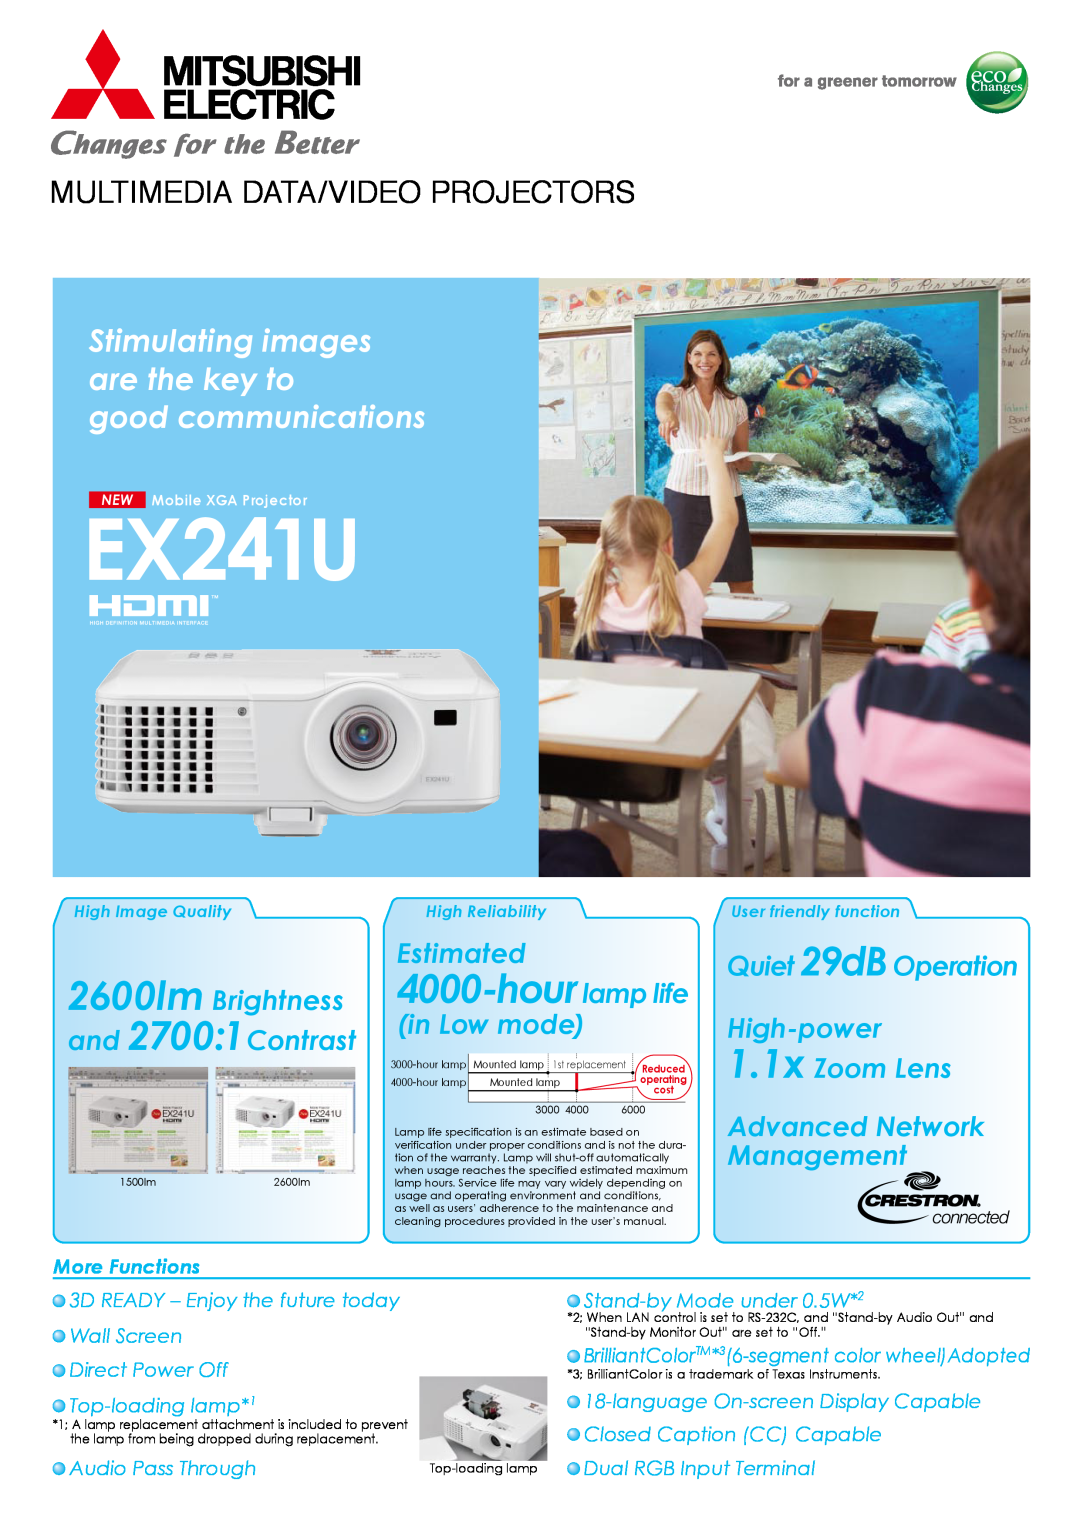 Mitsubishi Electronics EX241U warranty hour lamp life, Multimedia Data/Video Projectors, Estimated, in Low mode, 3000 